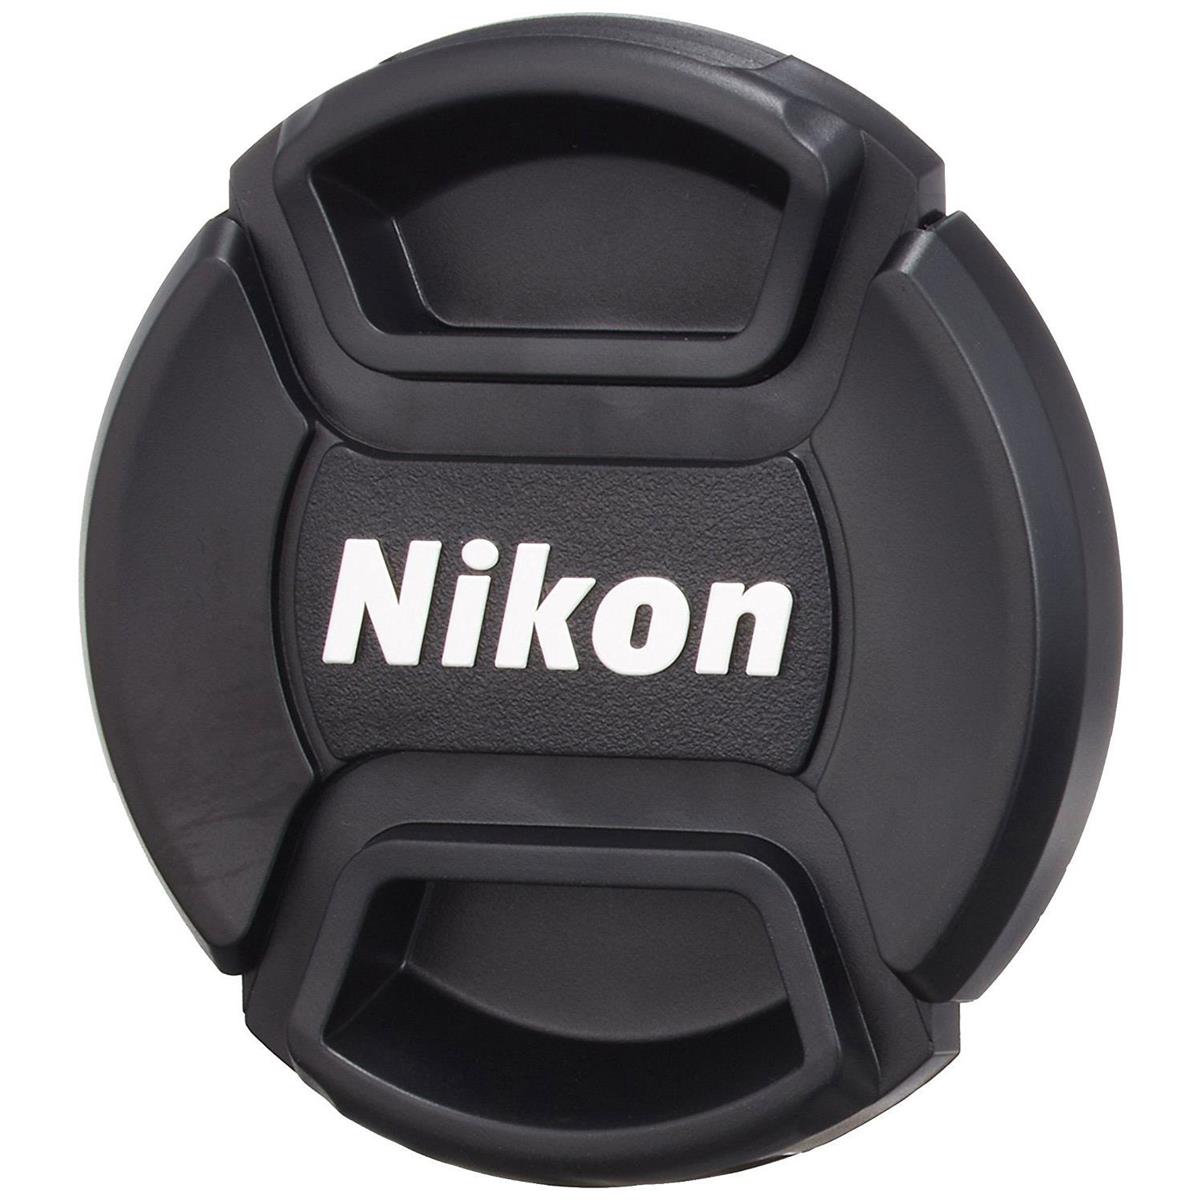 Nikon 58mm Snap-On Lens Cap